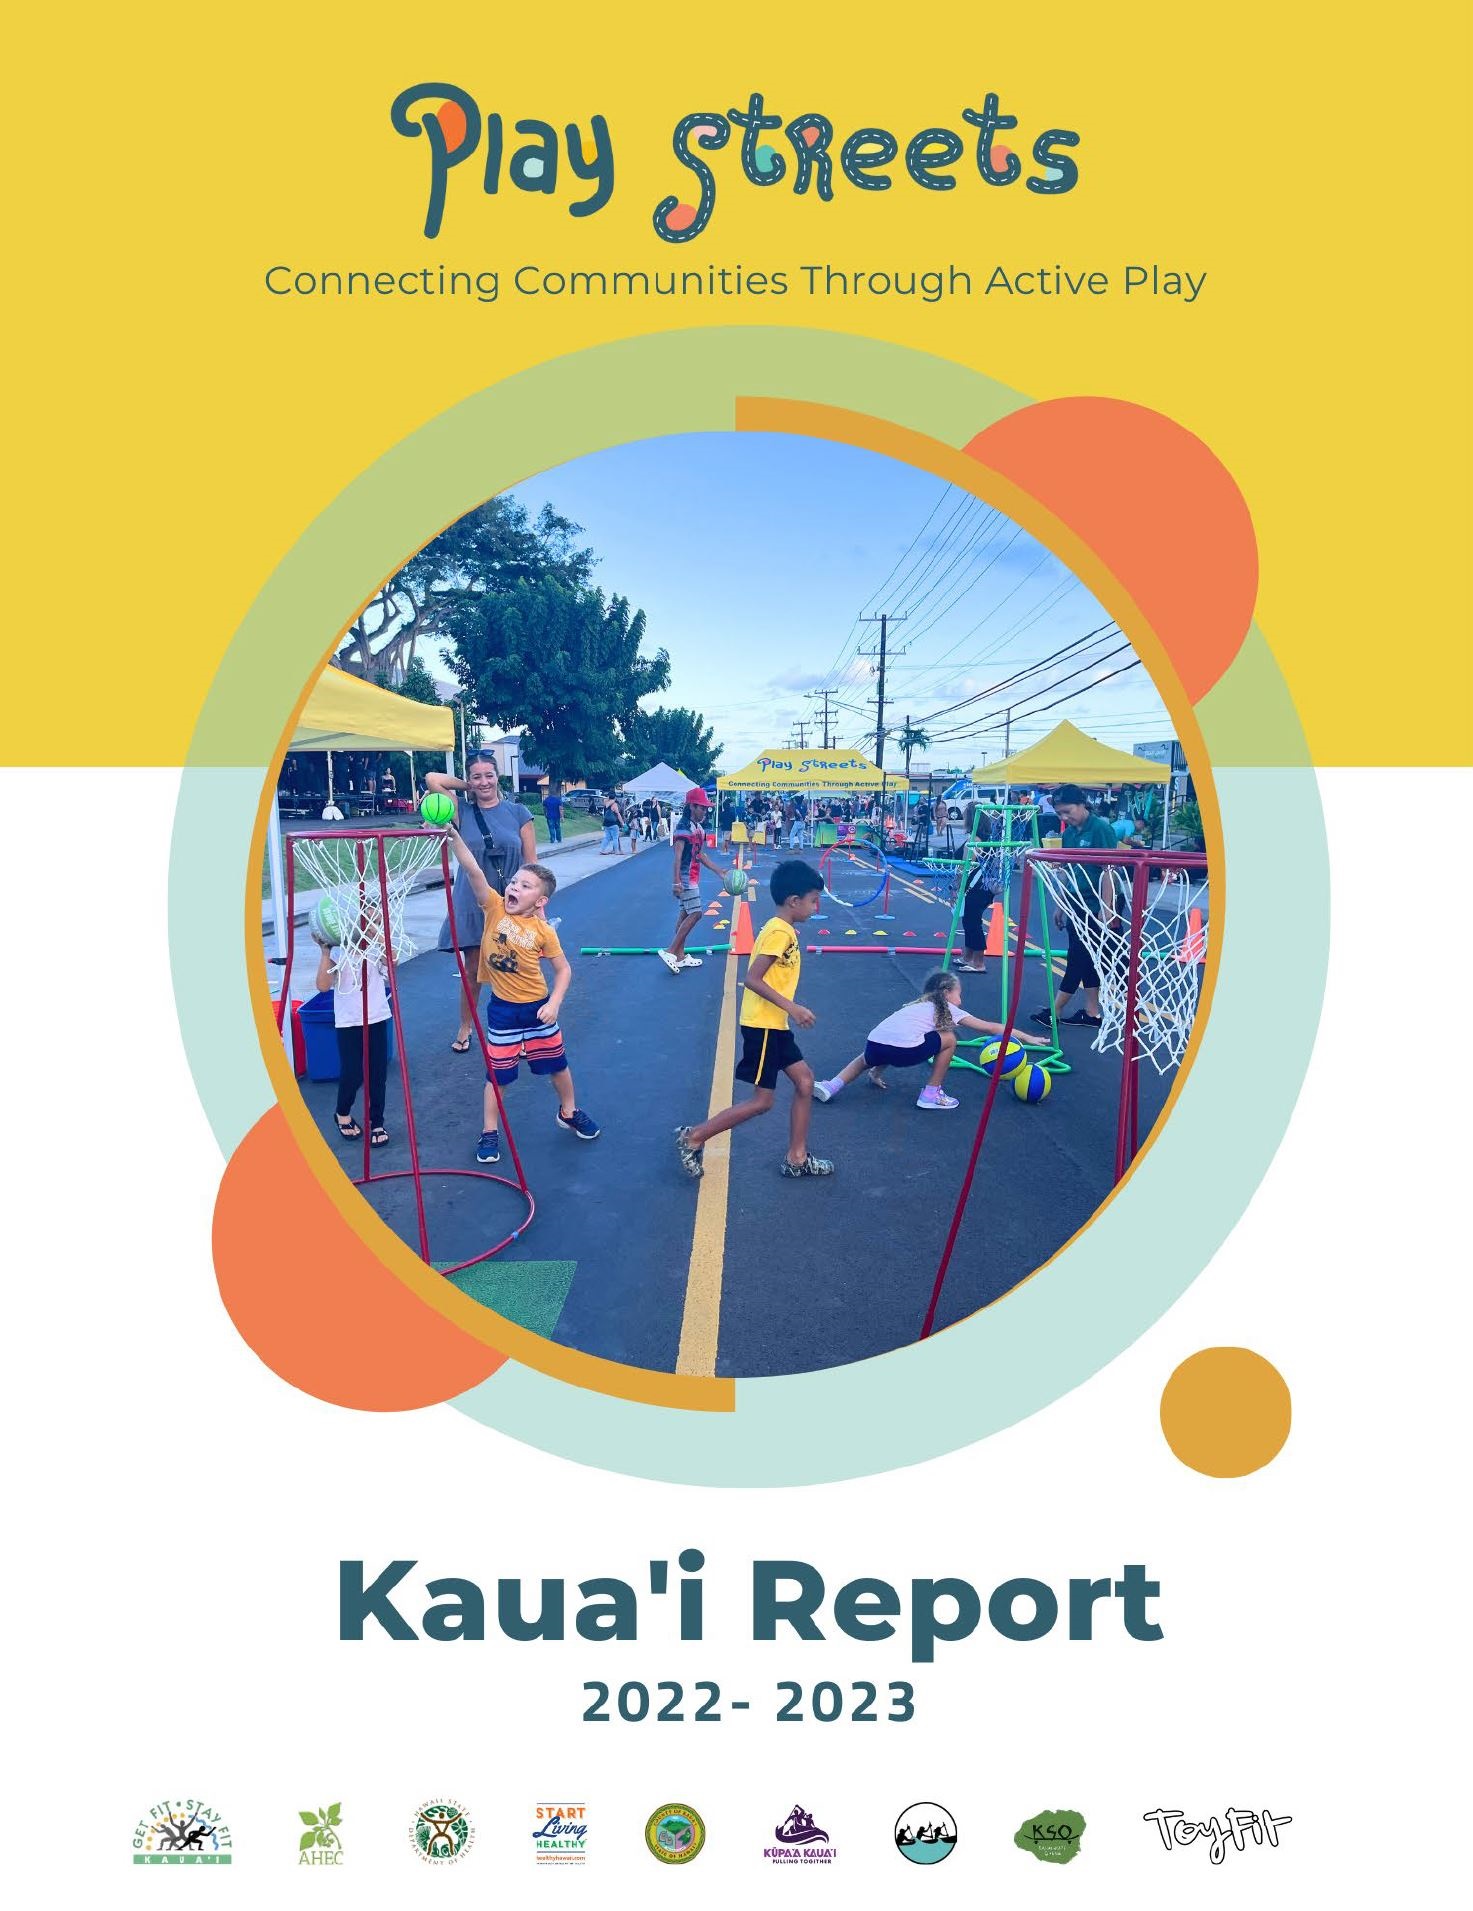 Kauai_Report.JPG